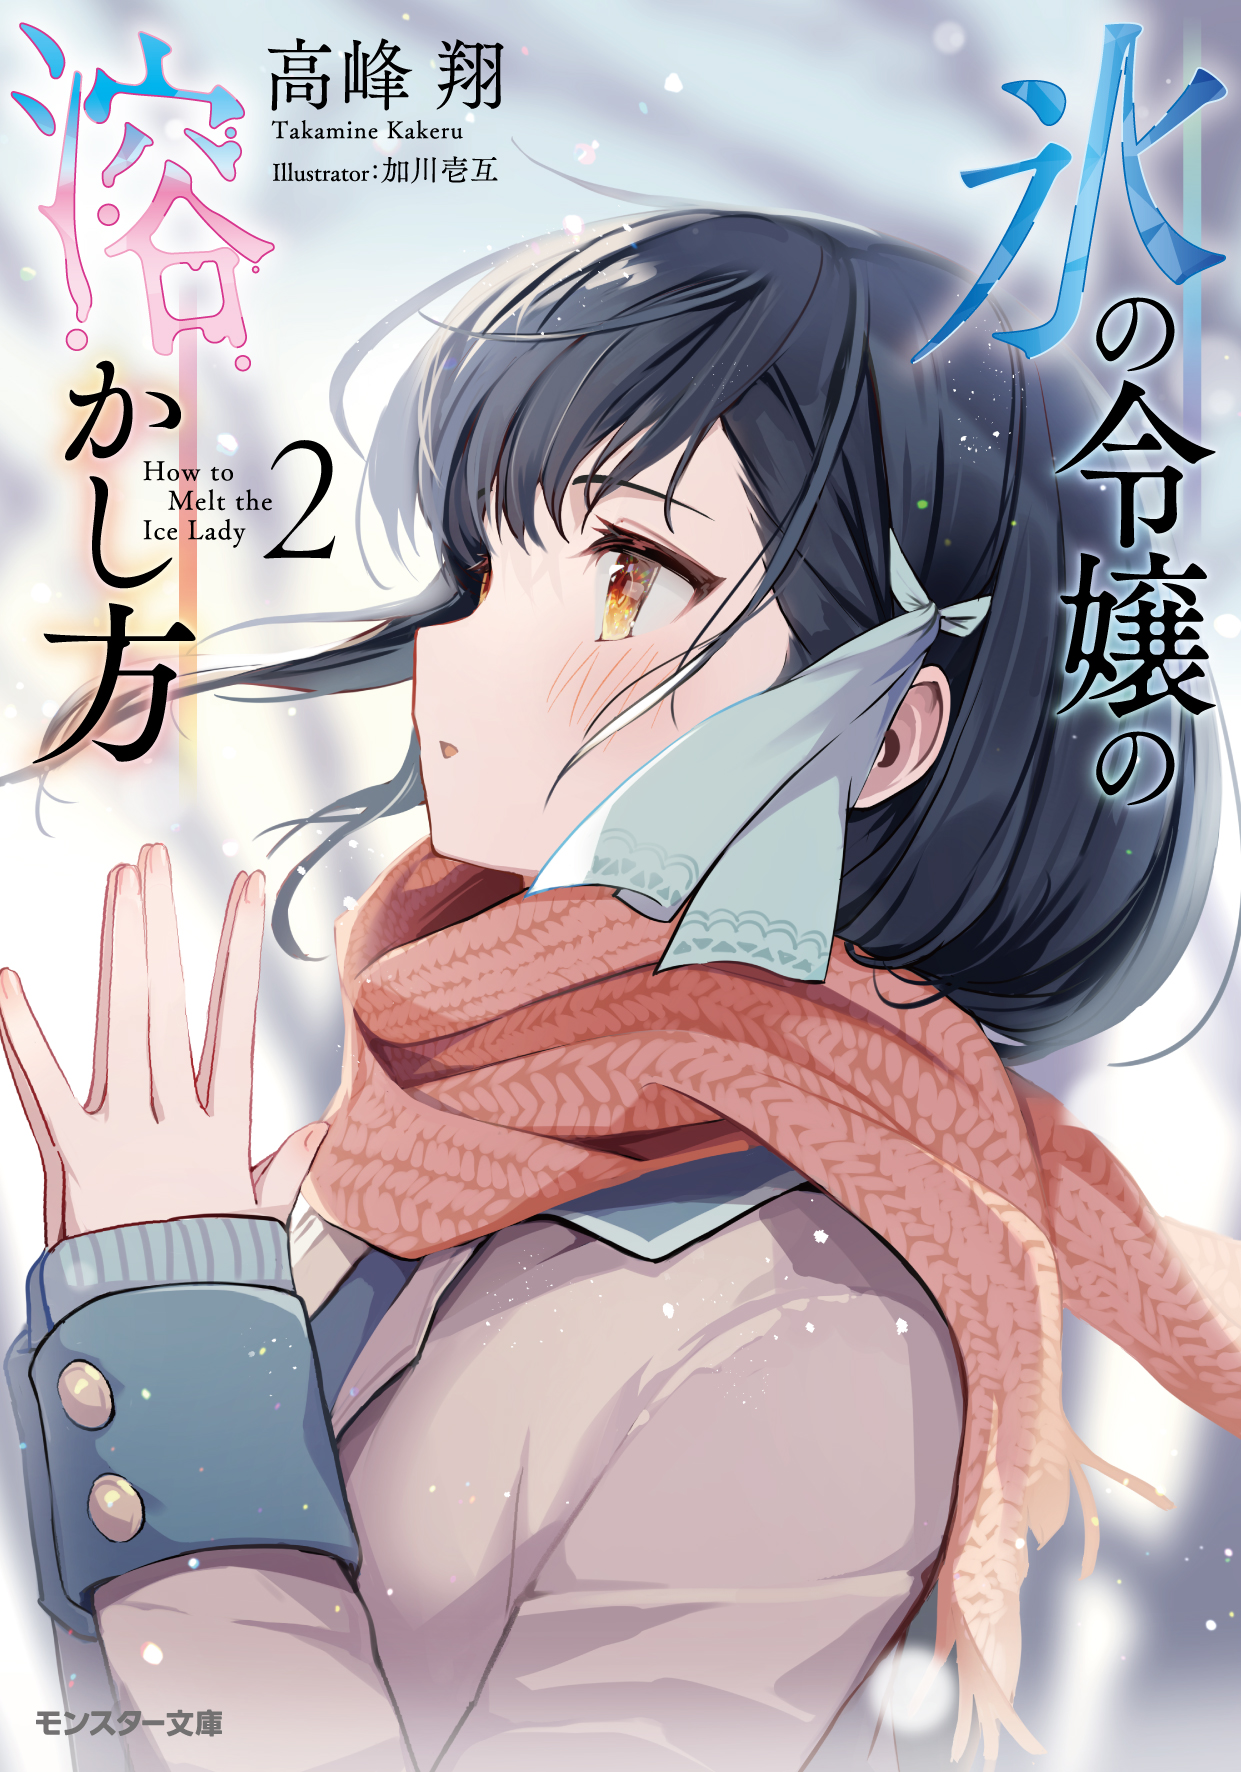 Takamine Kakeru - How to Melt the Ice Queen's Heart Volume 1 Cover - Illustration by Ichigo Kagawa